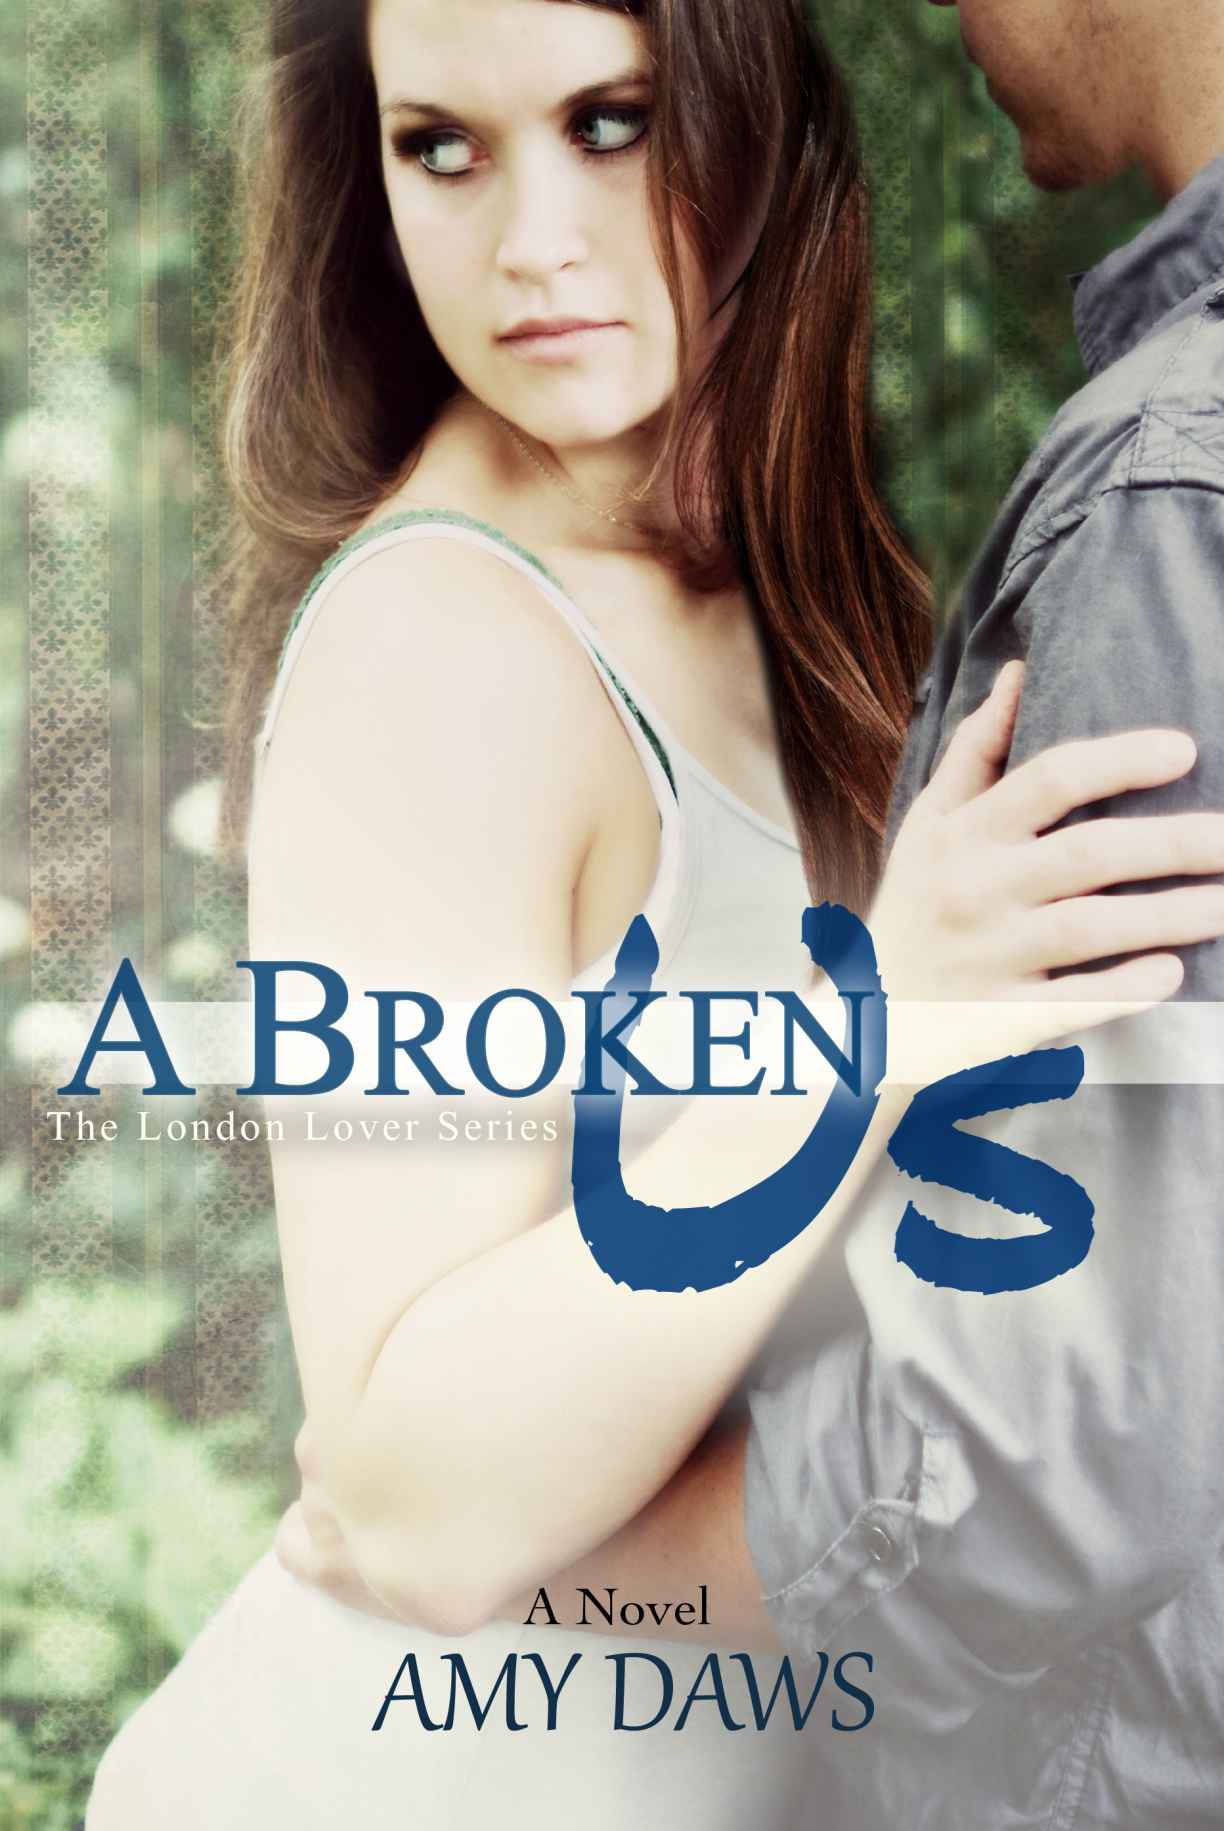 A Broken Us (London Lover Series Book 1)